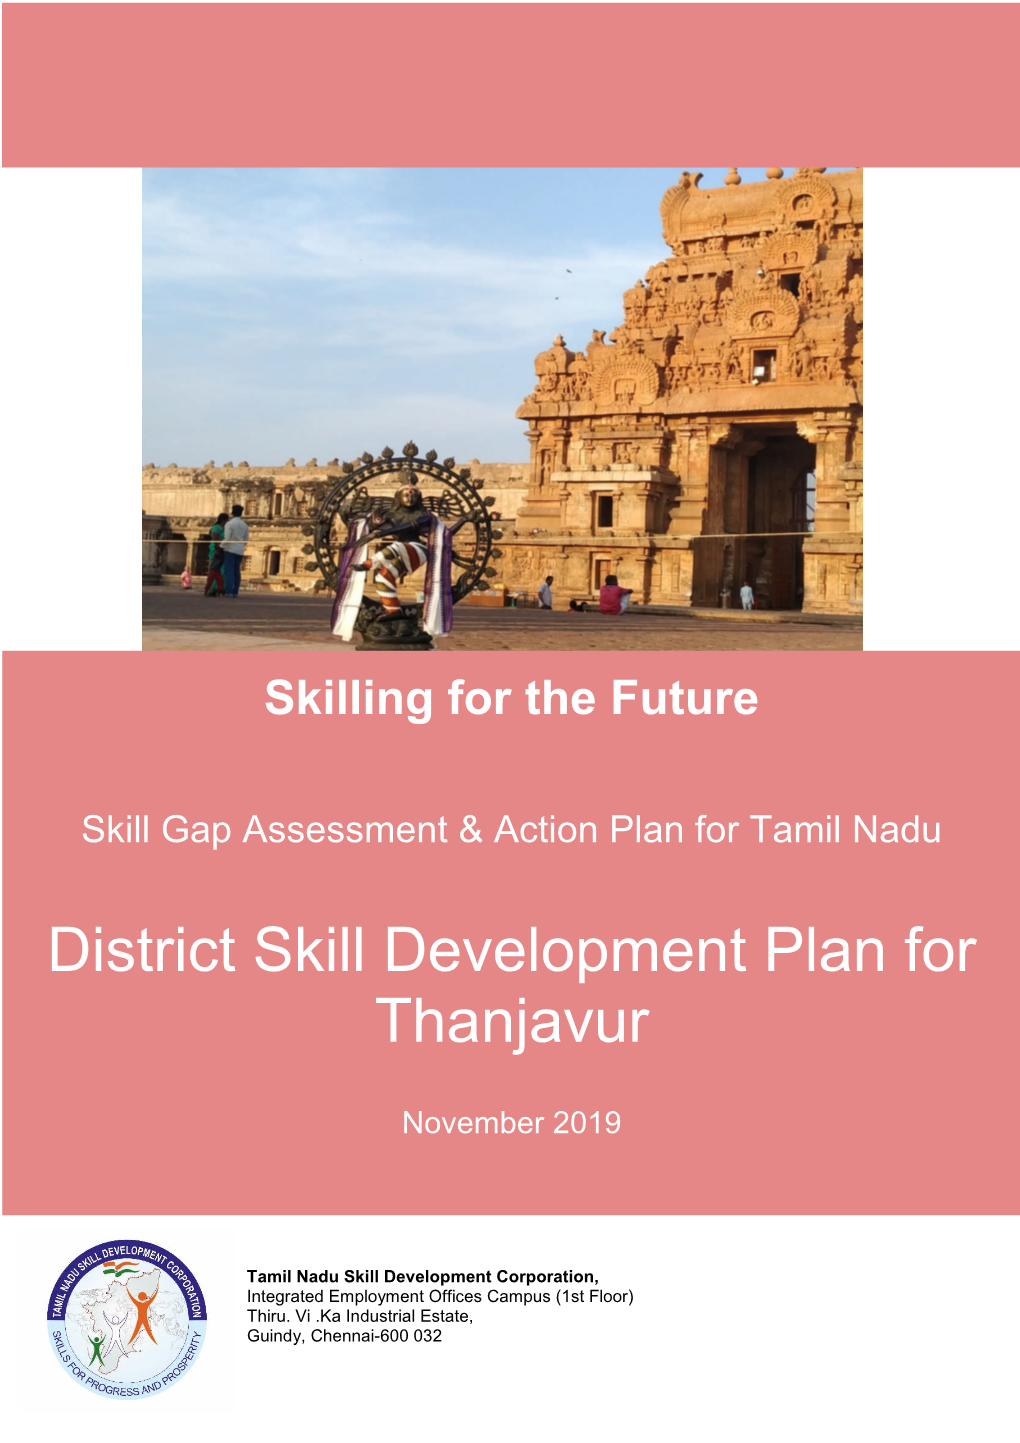 District Skill Development Plan for Thanjavur